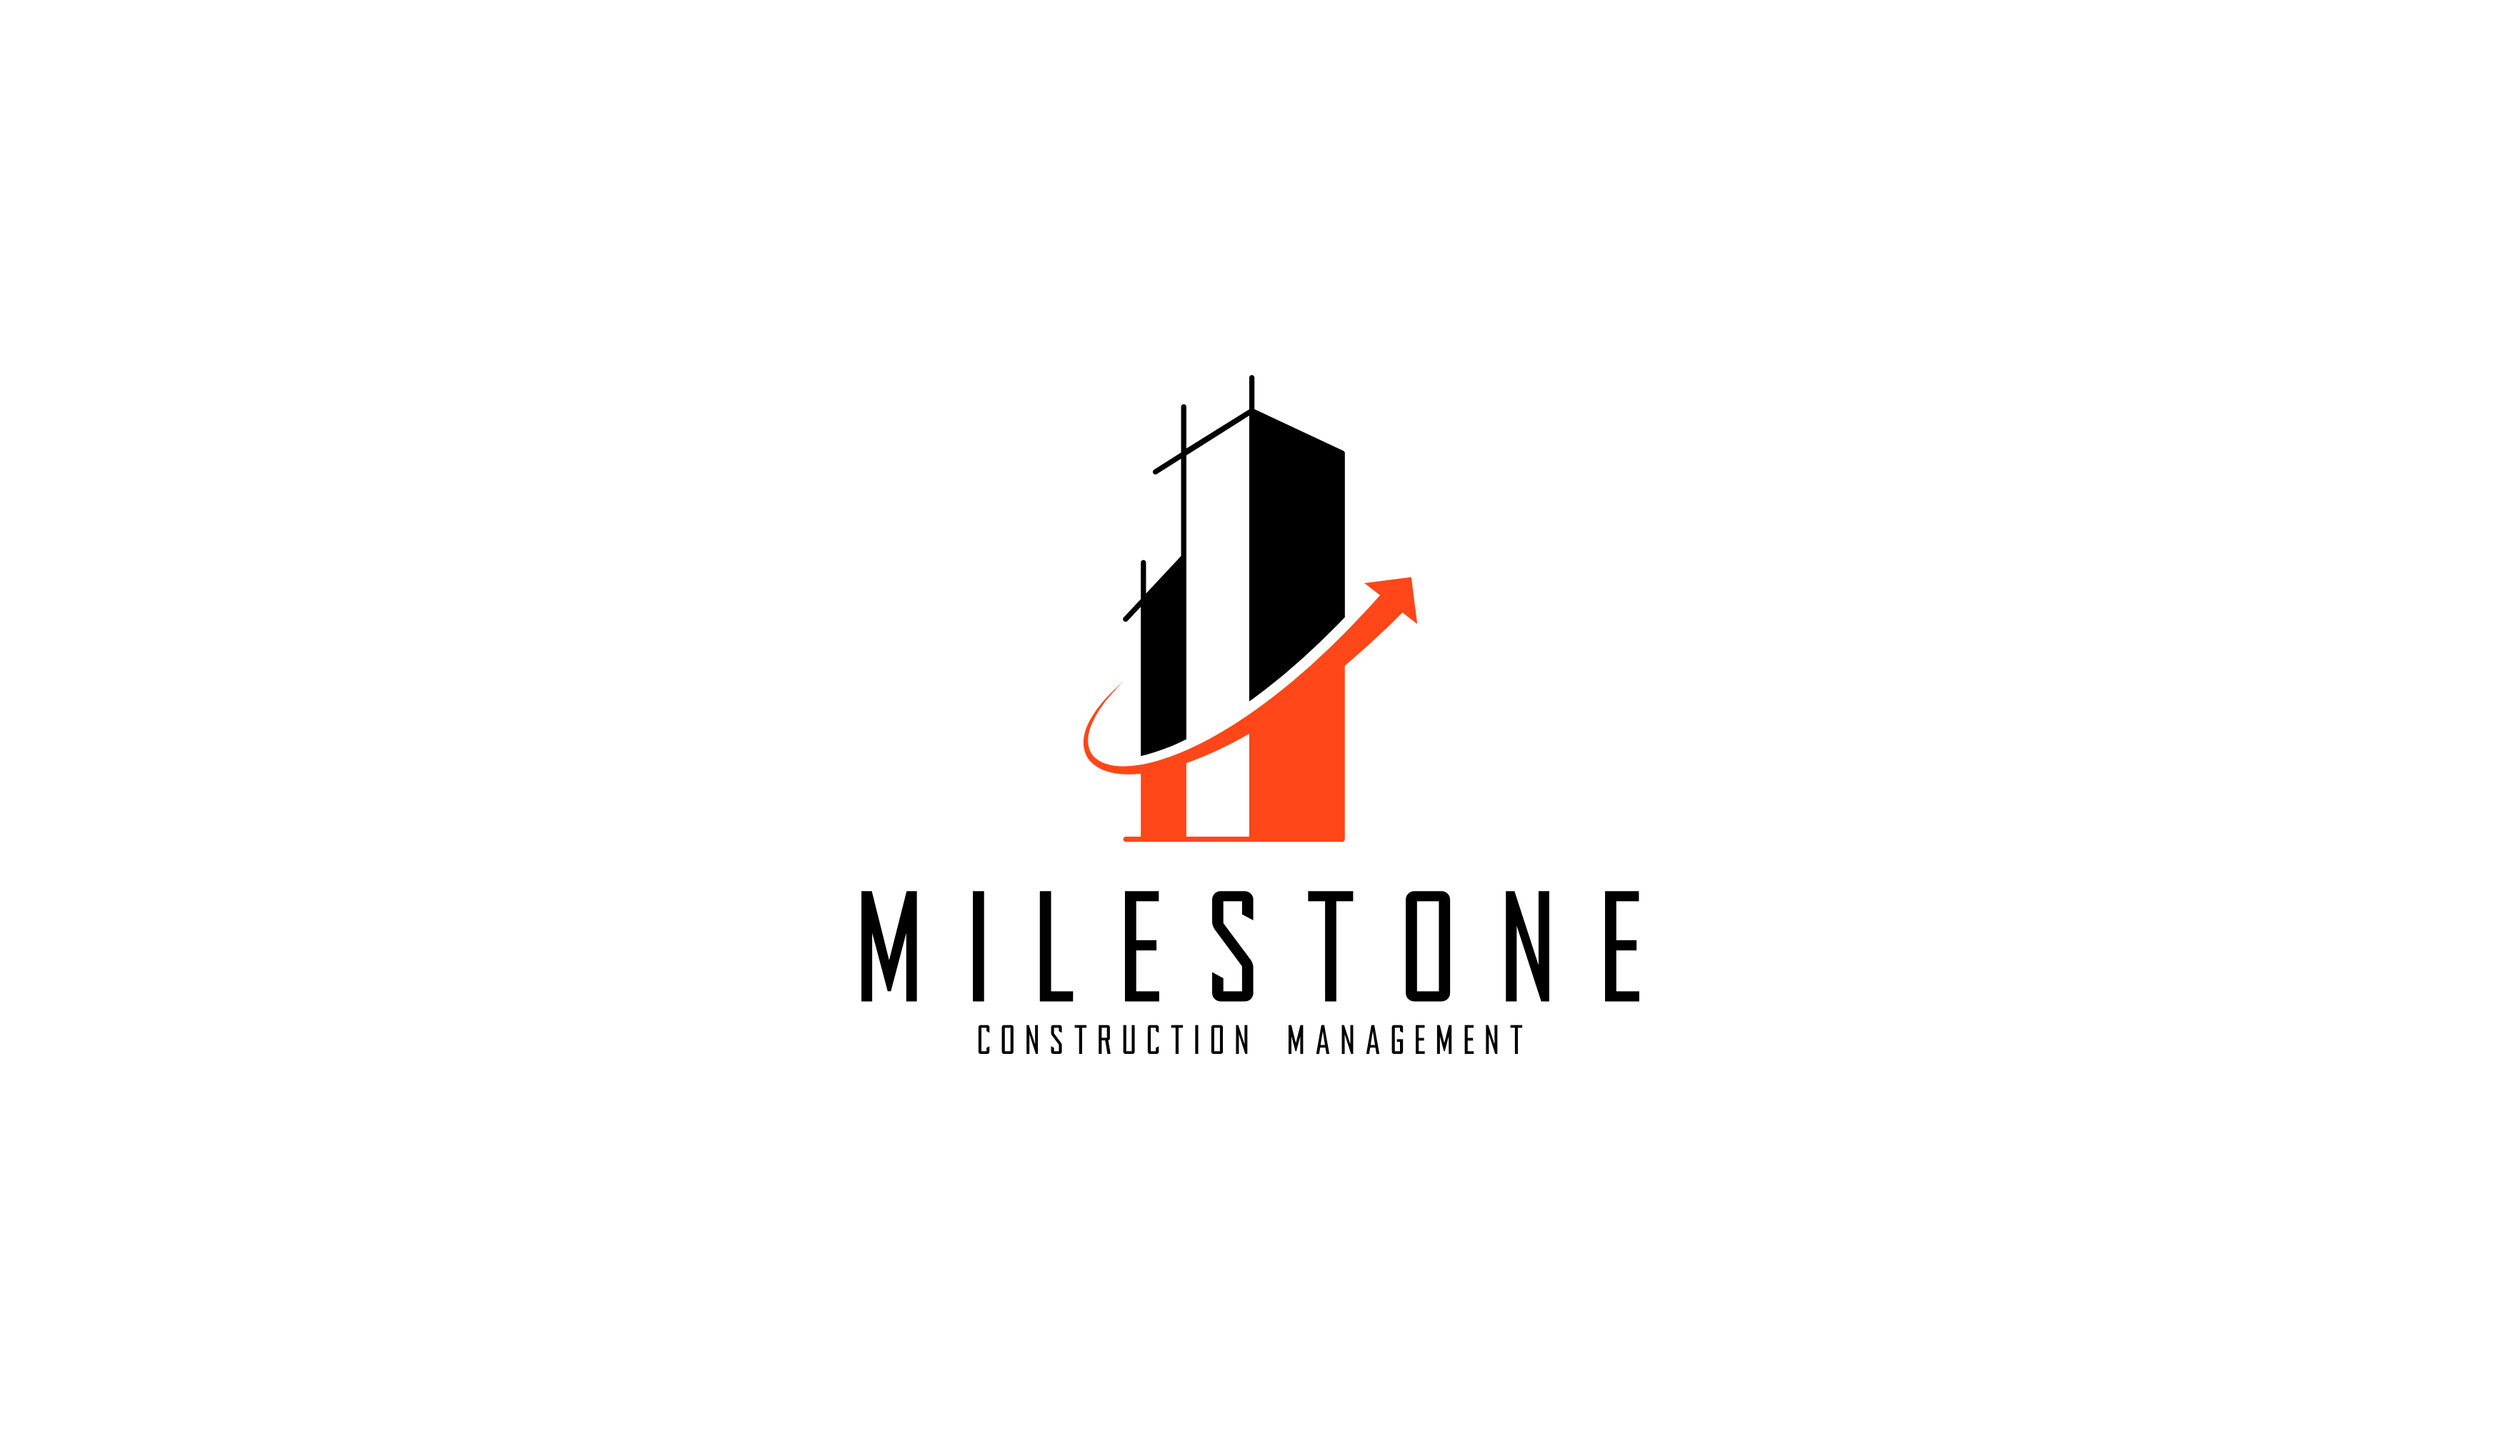 Milestone Construction Management